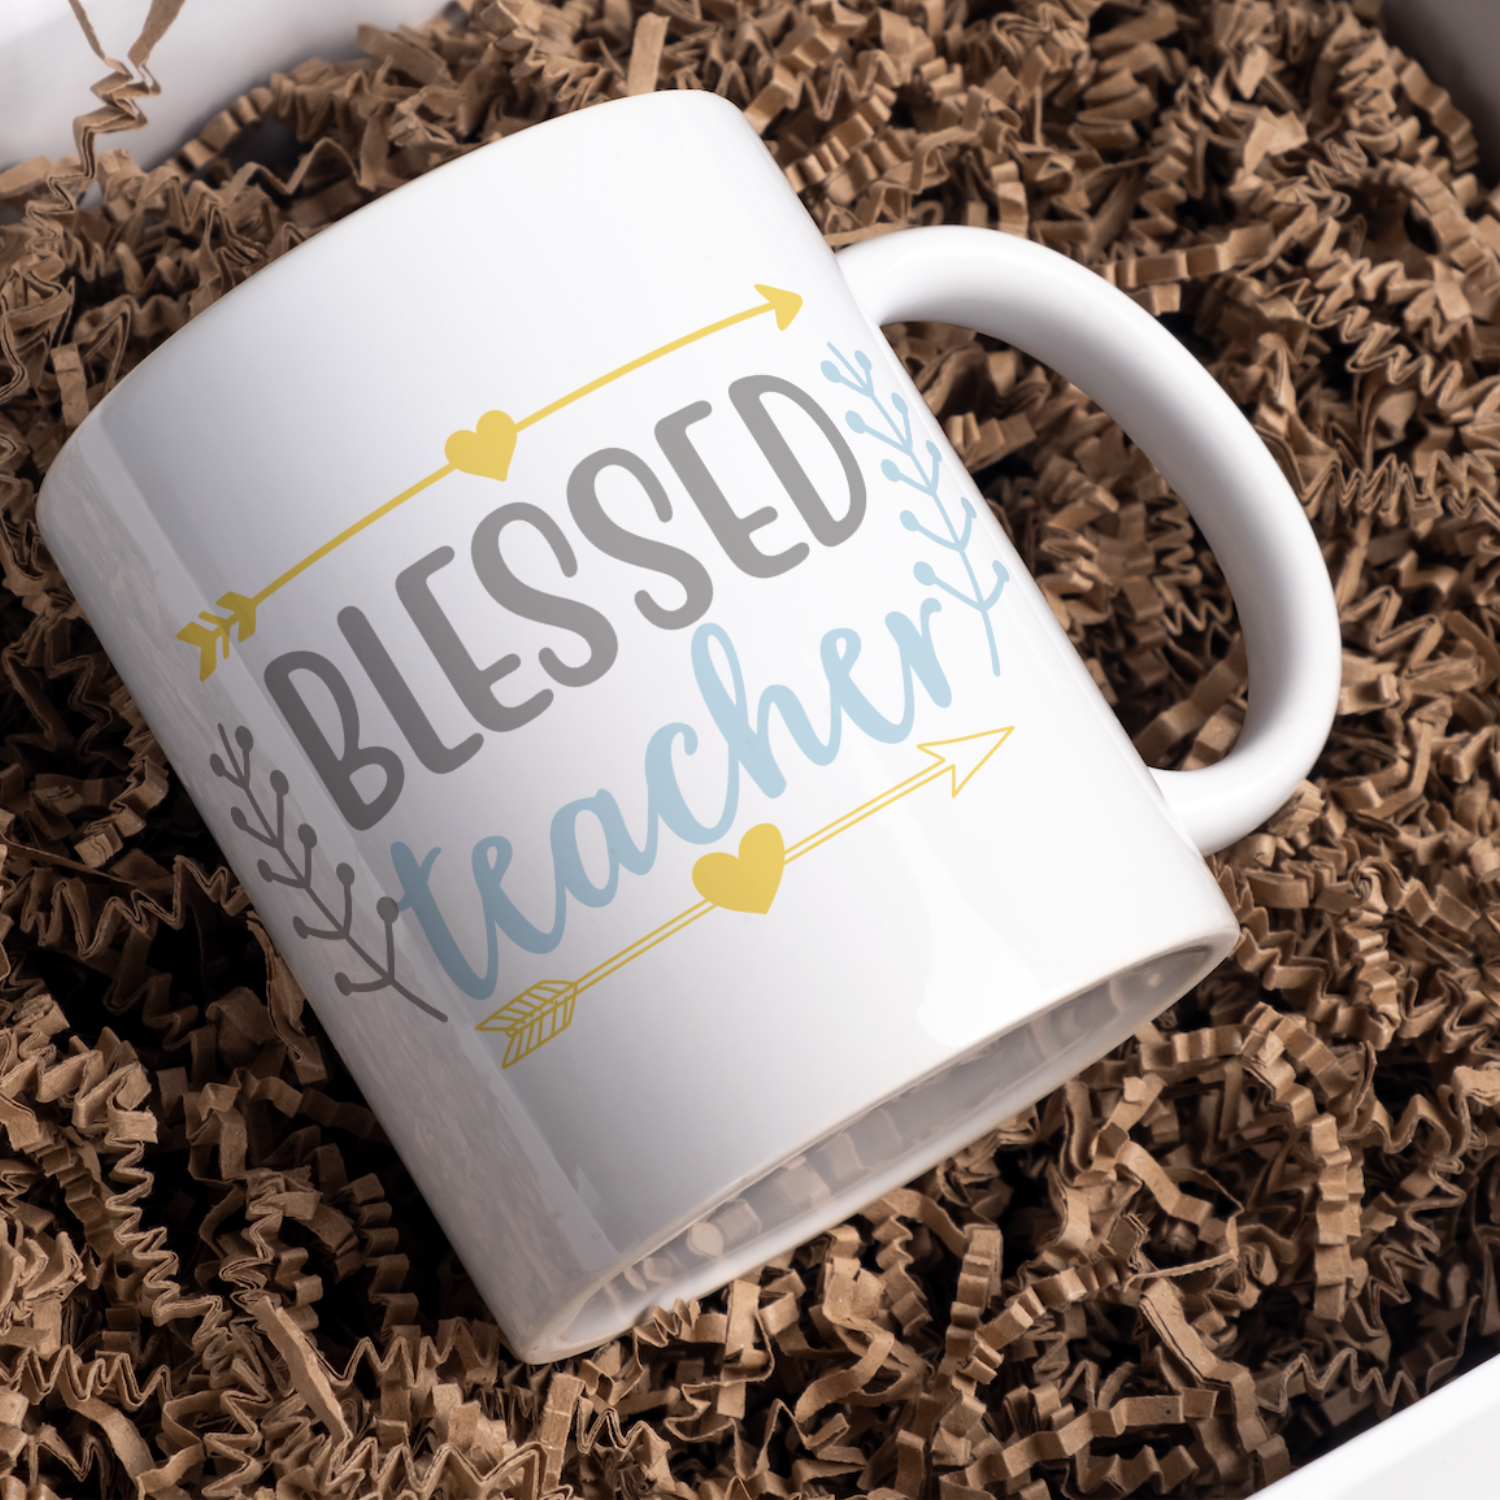 Blessed Teacher SVG | Digital Download | Cut File | SVG - Only The Sweet Stuff